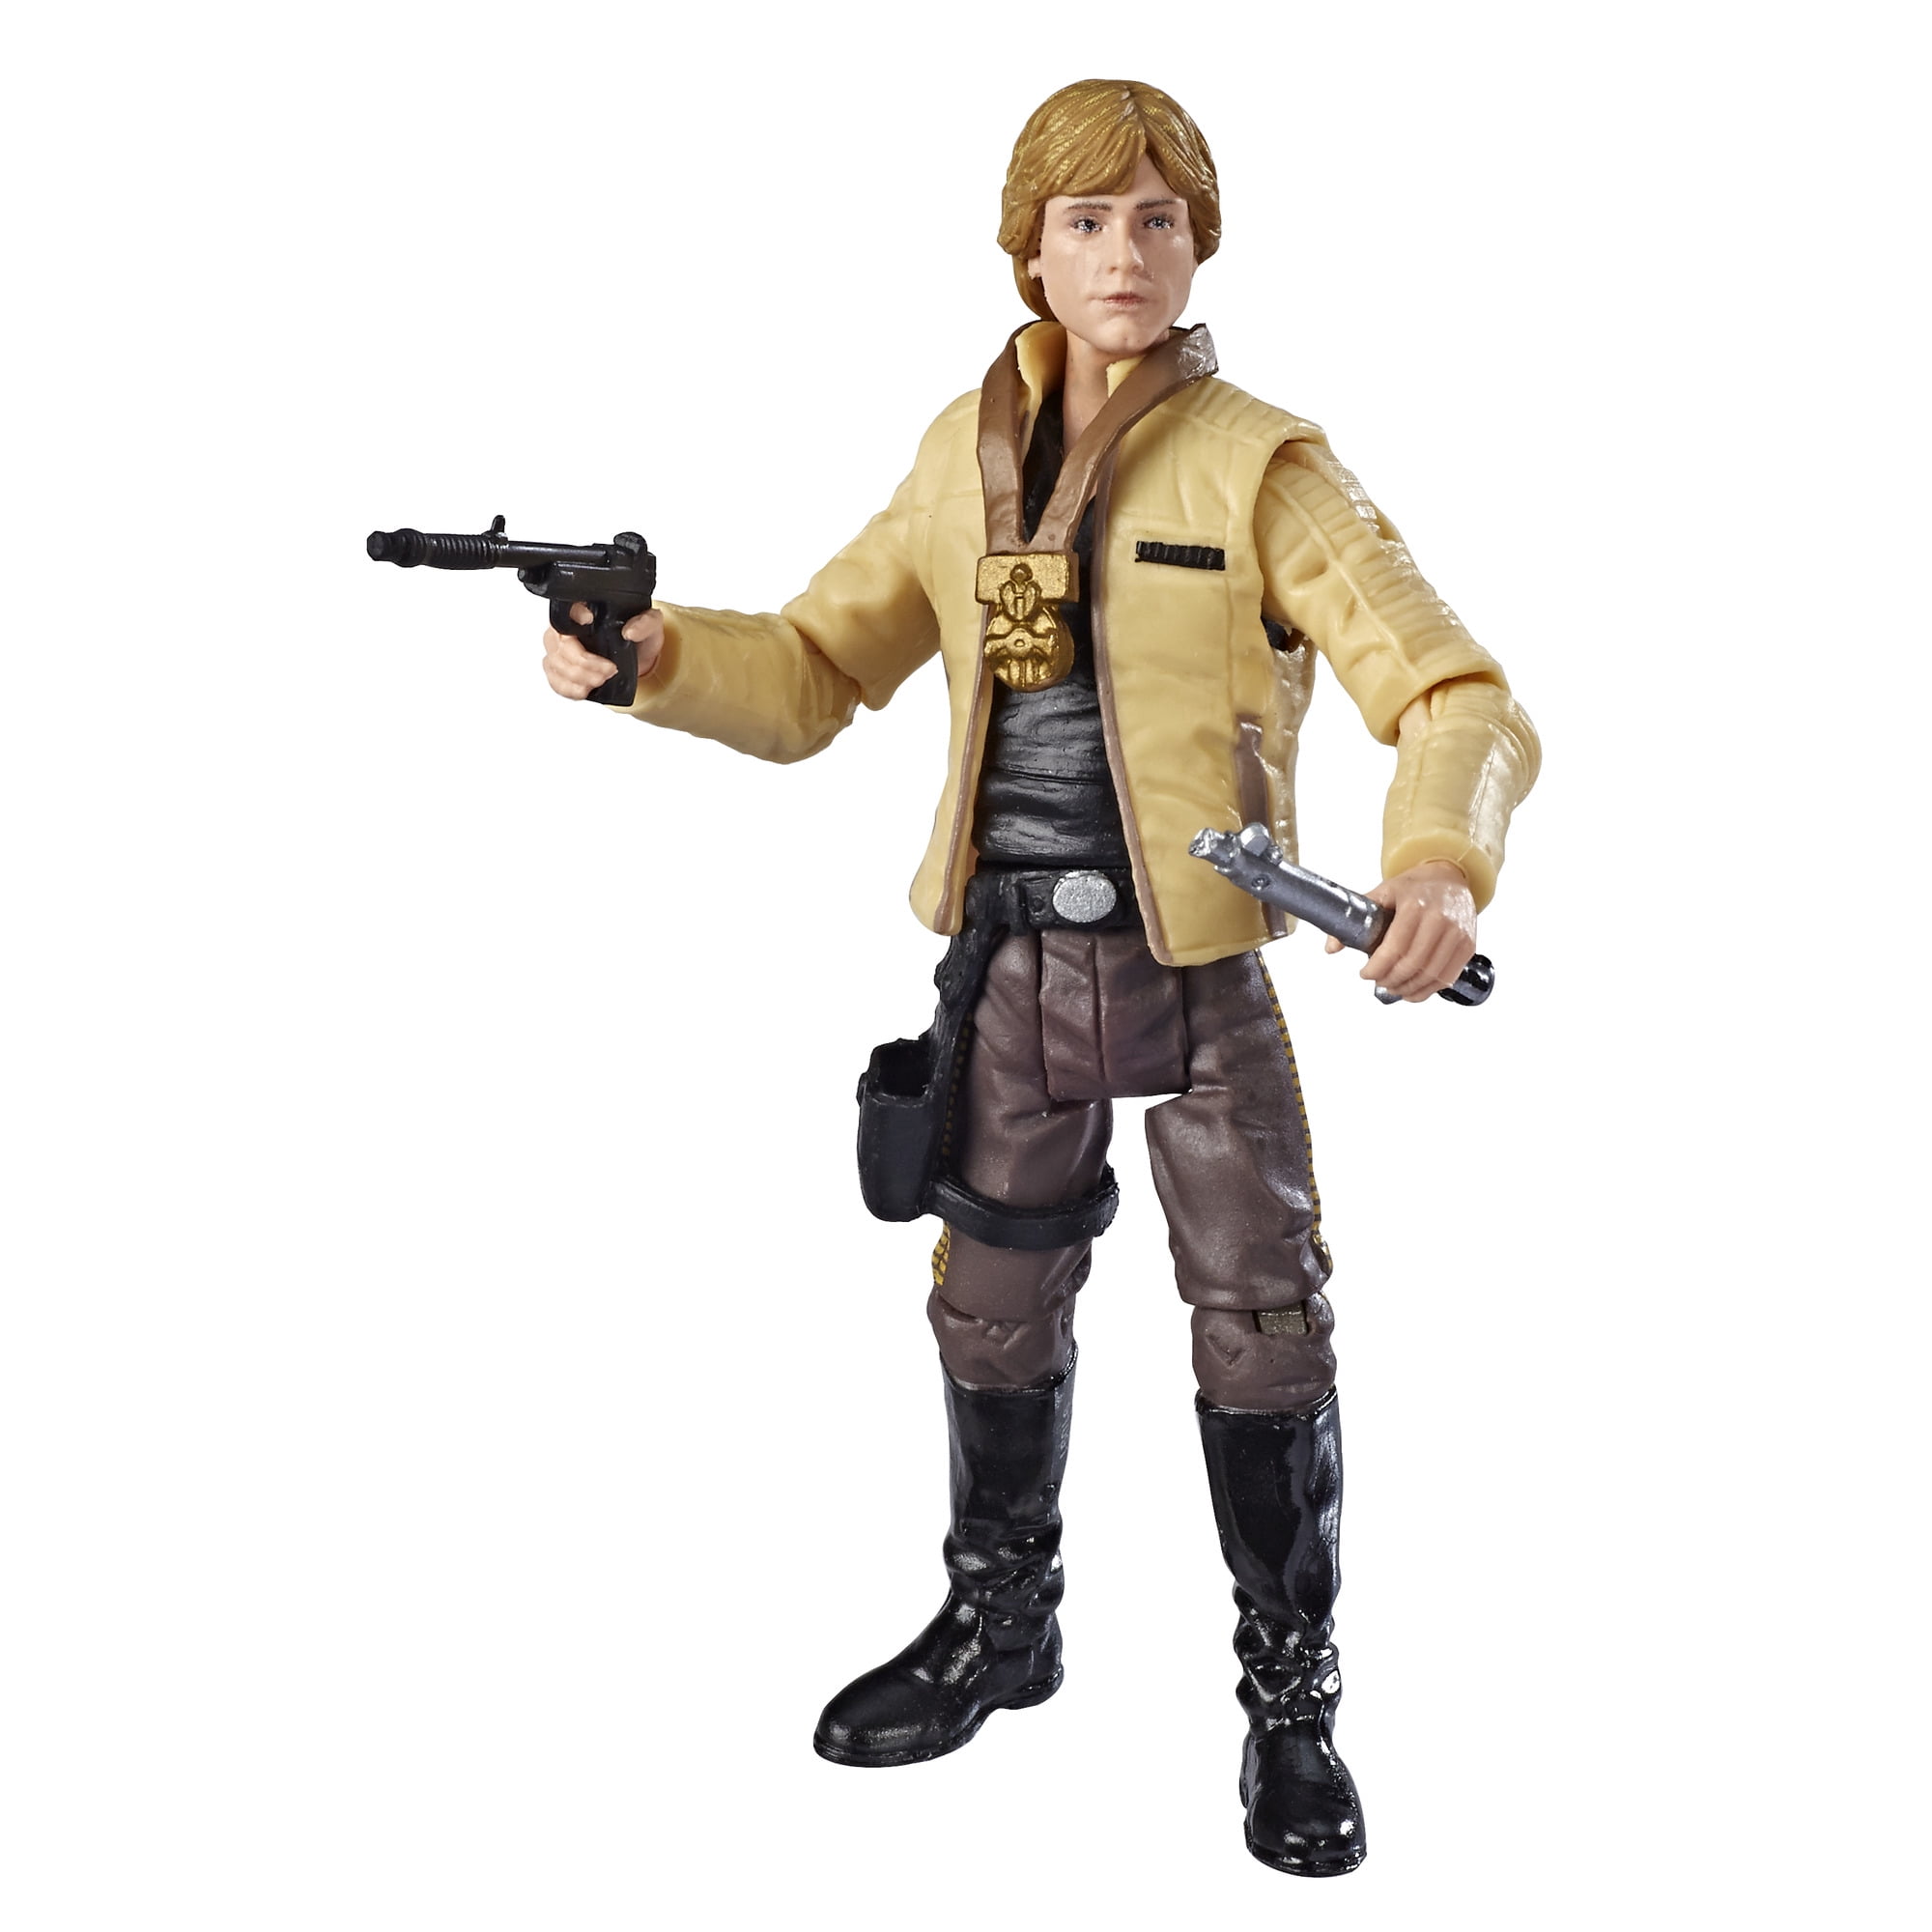 79446862 for sale online Hasbro Star Wars The Vintage Collection Luke Skywalker 3.75 inch Action Figure 